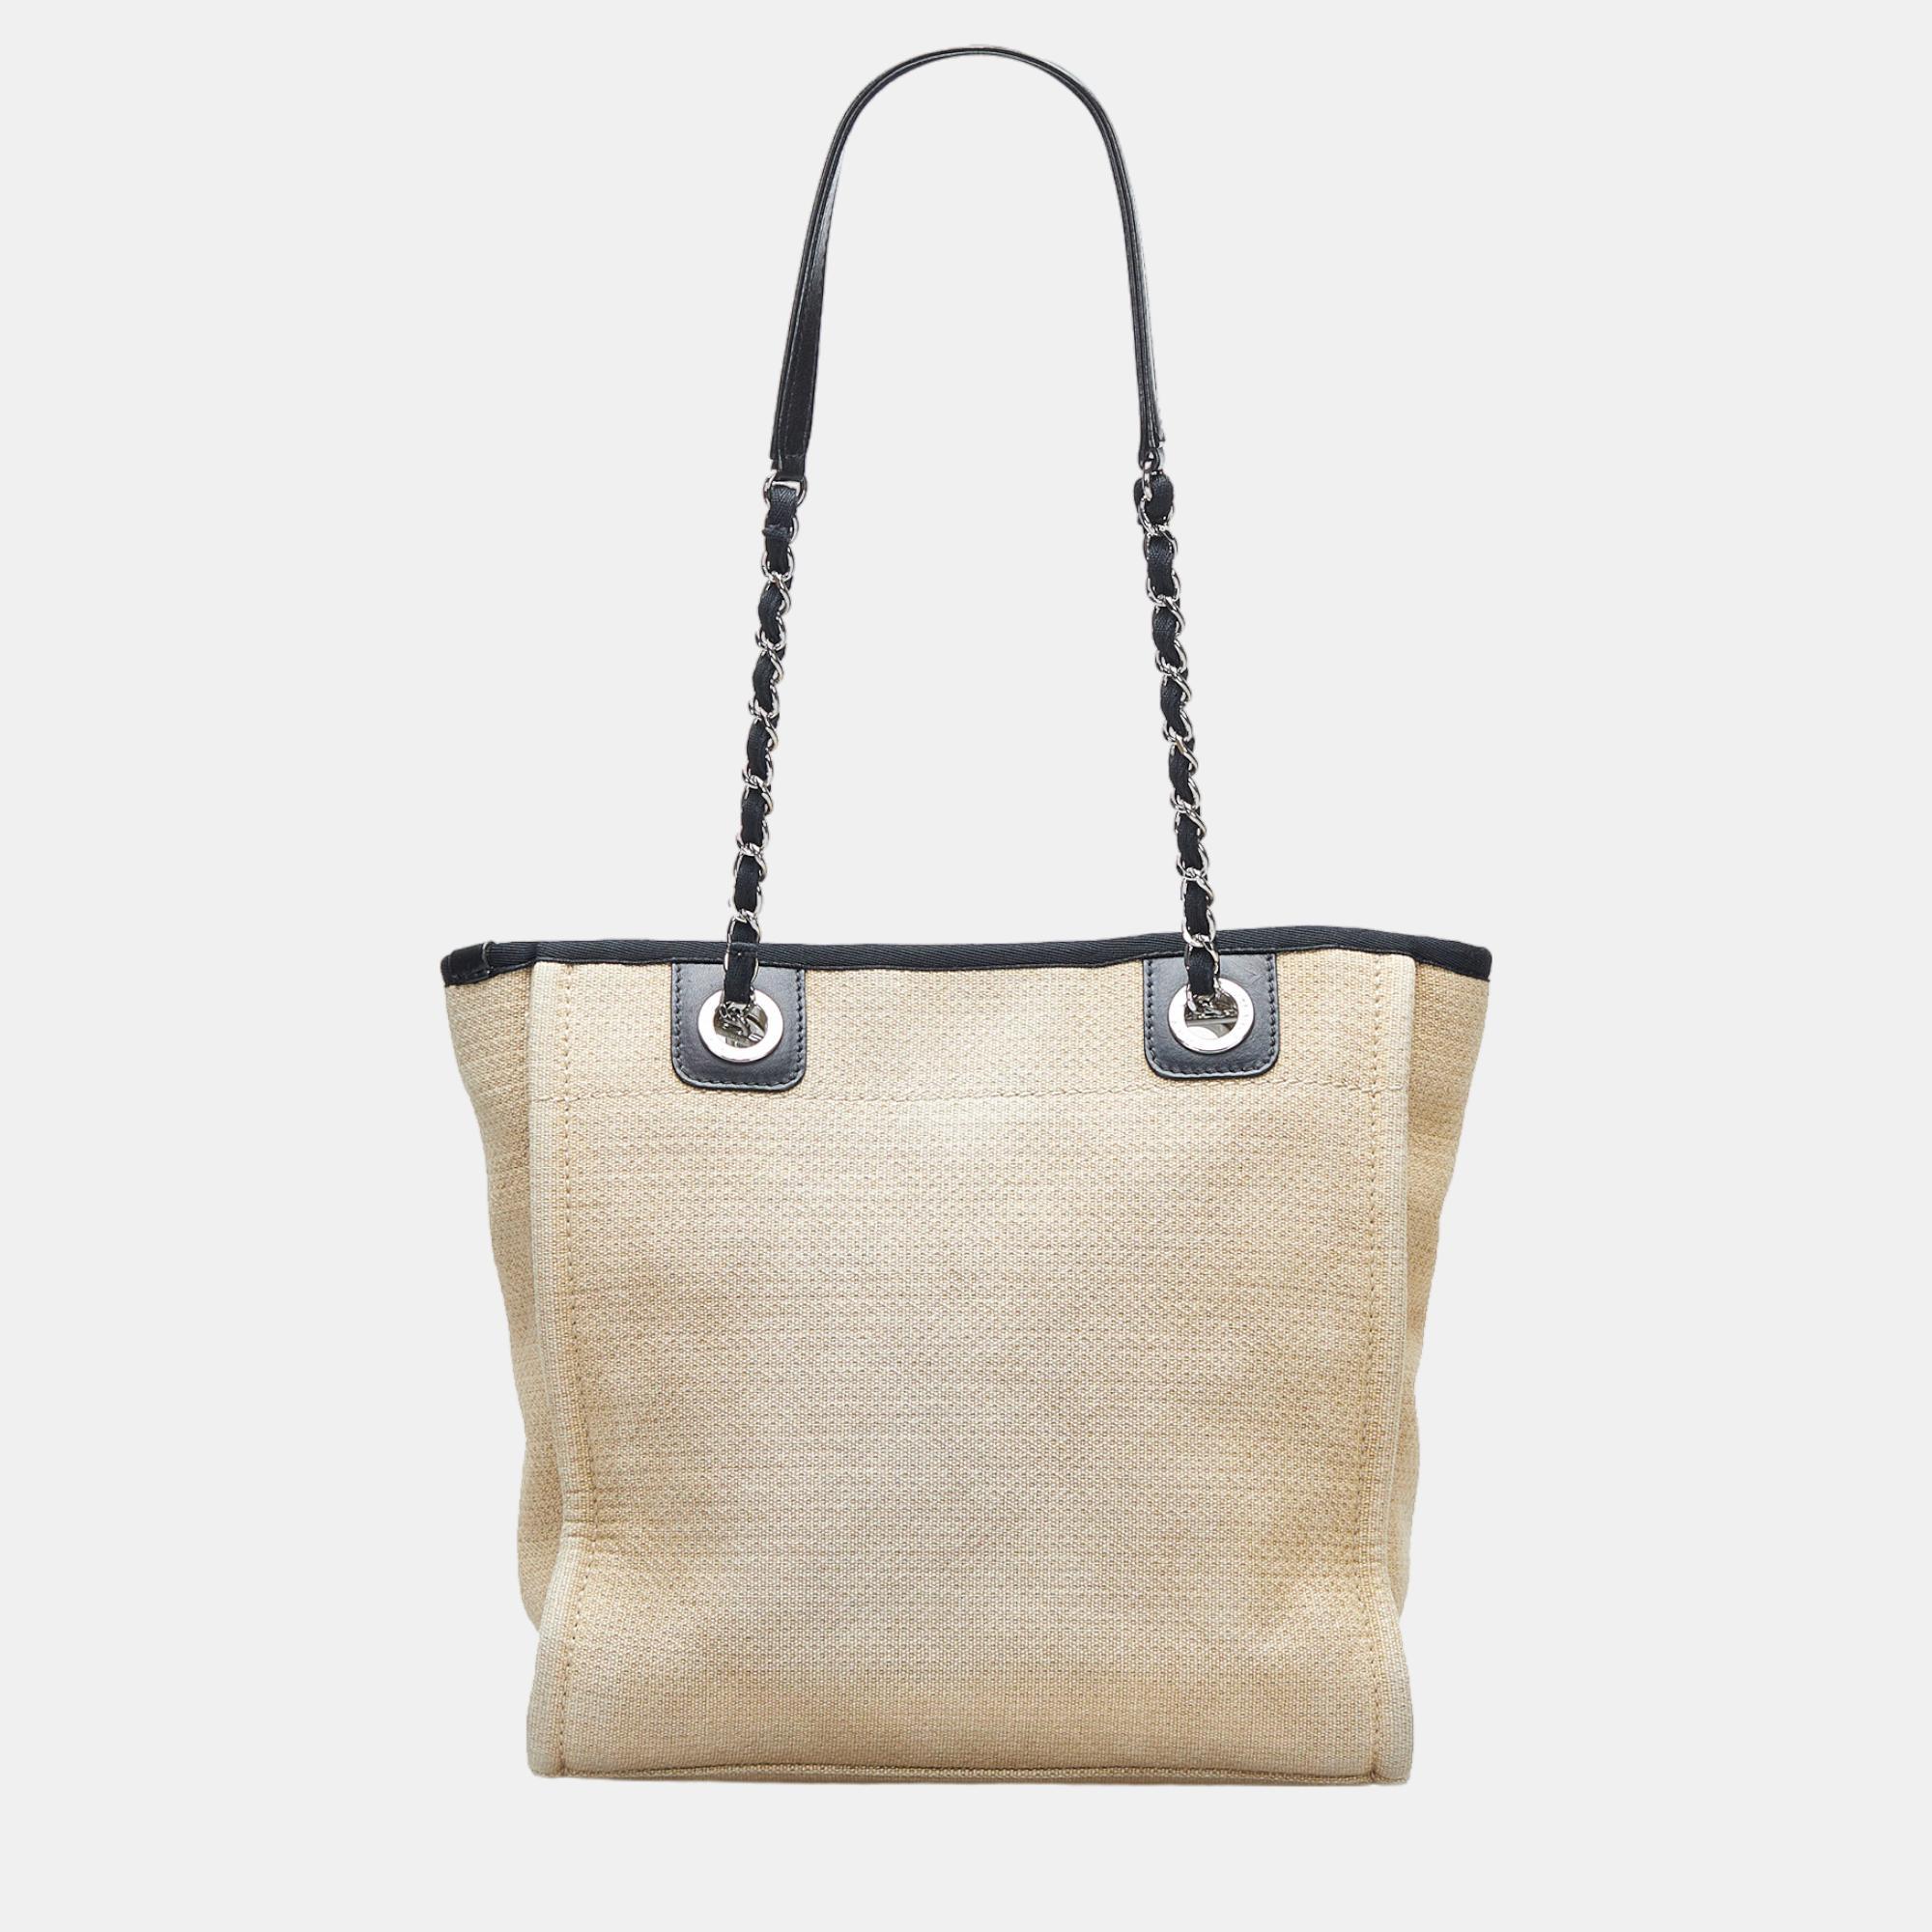 Chanel Beige/Brown Mini Deauville Tote Bag